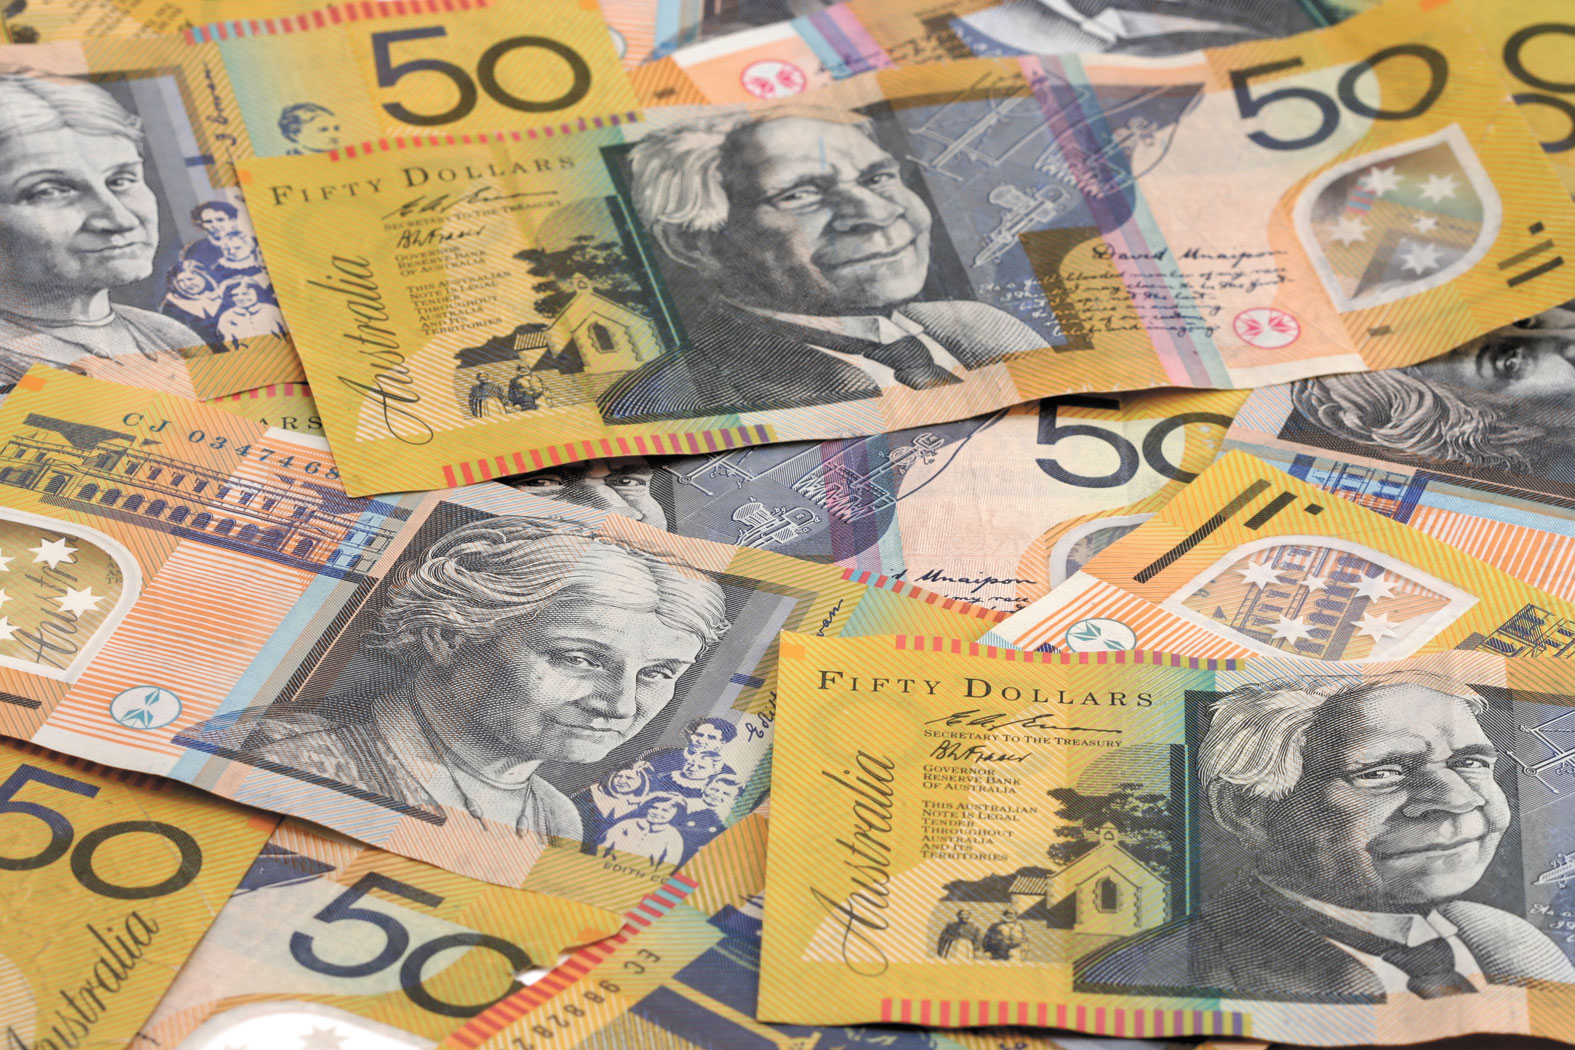 How Much AUD – Australian Dollar To Get A Vietnam Visa?